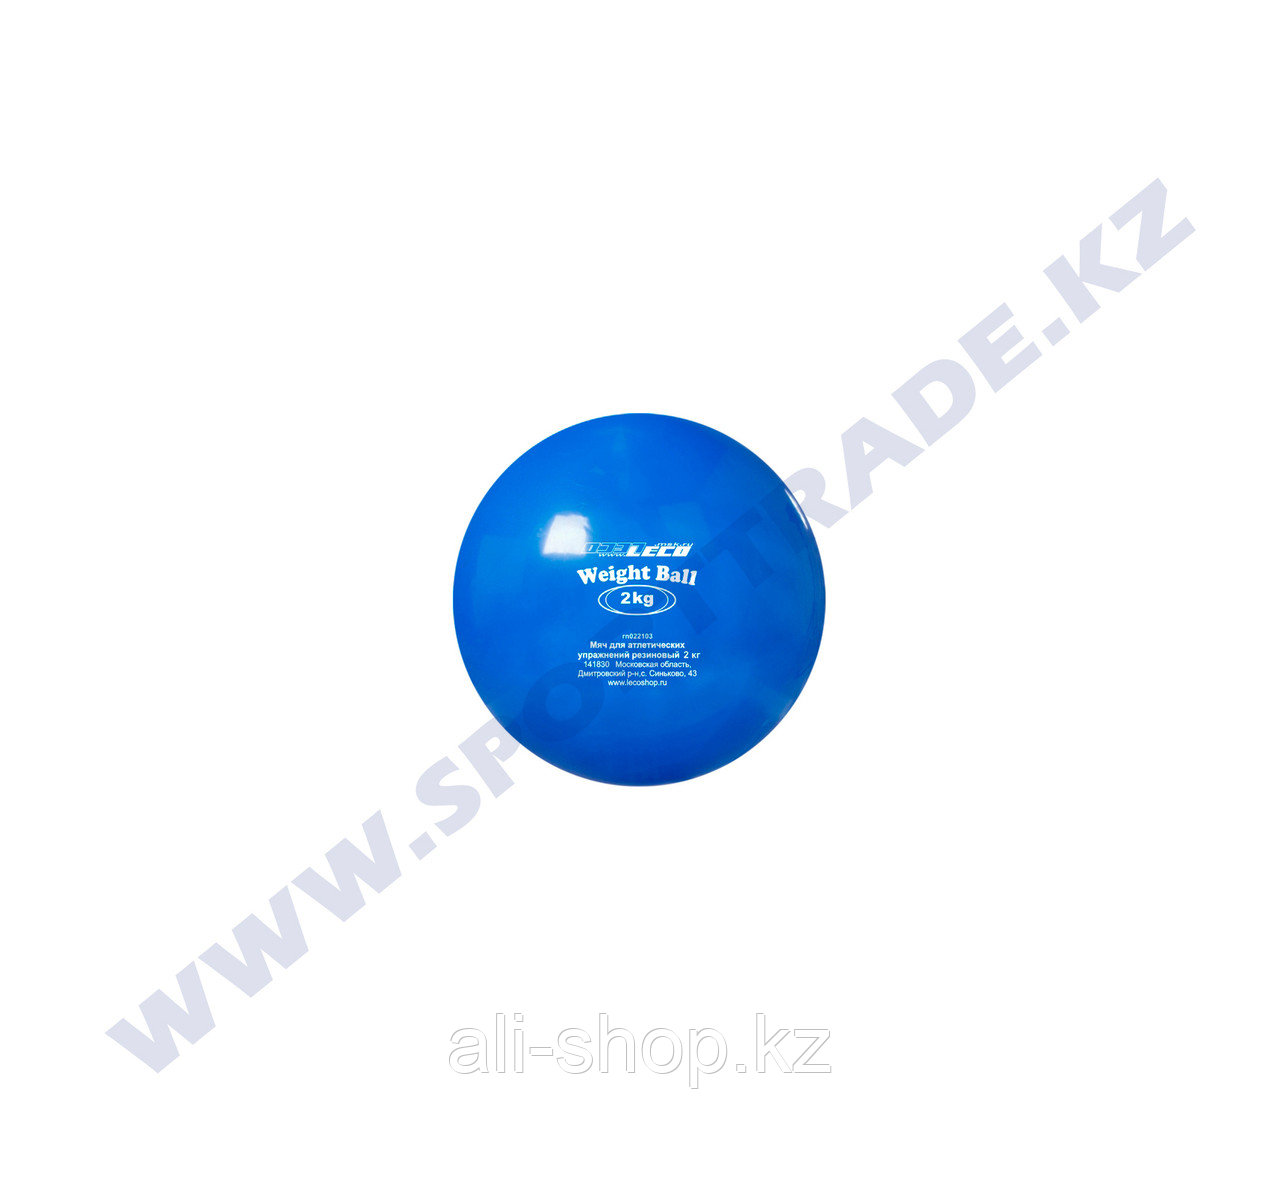 Мяч медицинбол (Вейтбол) 2 кг Россия